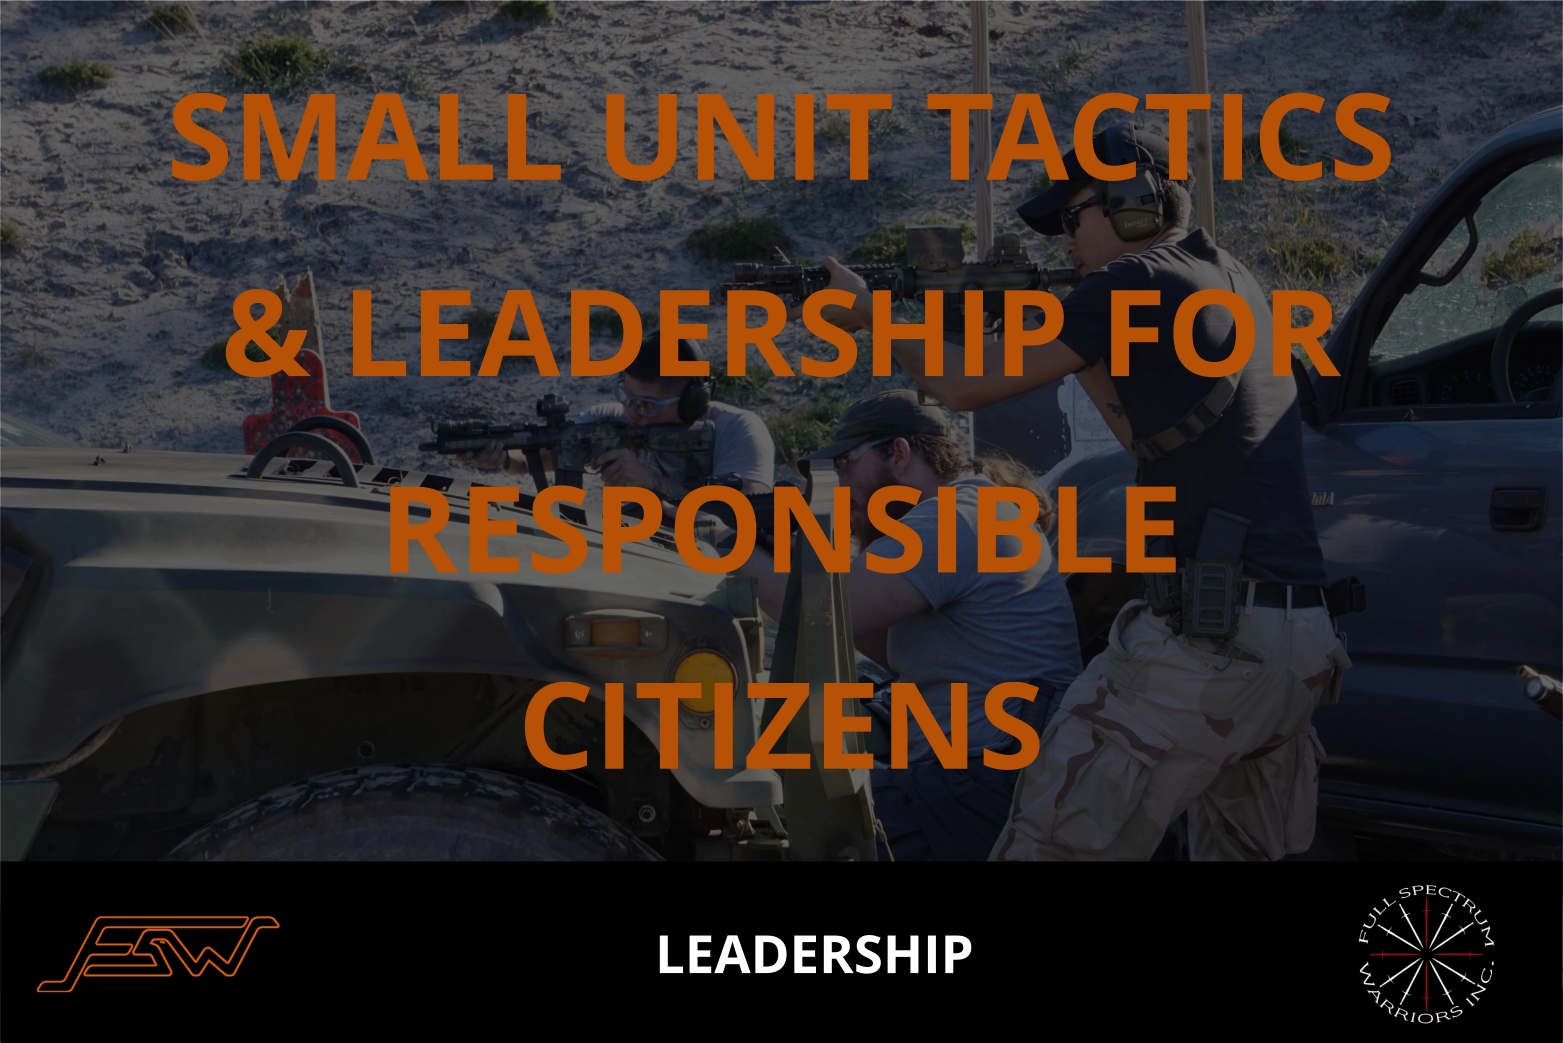 SMALL UNIT TACTICS & LEADERSHIP FOR RESPONSIBLE CITIZENS